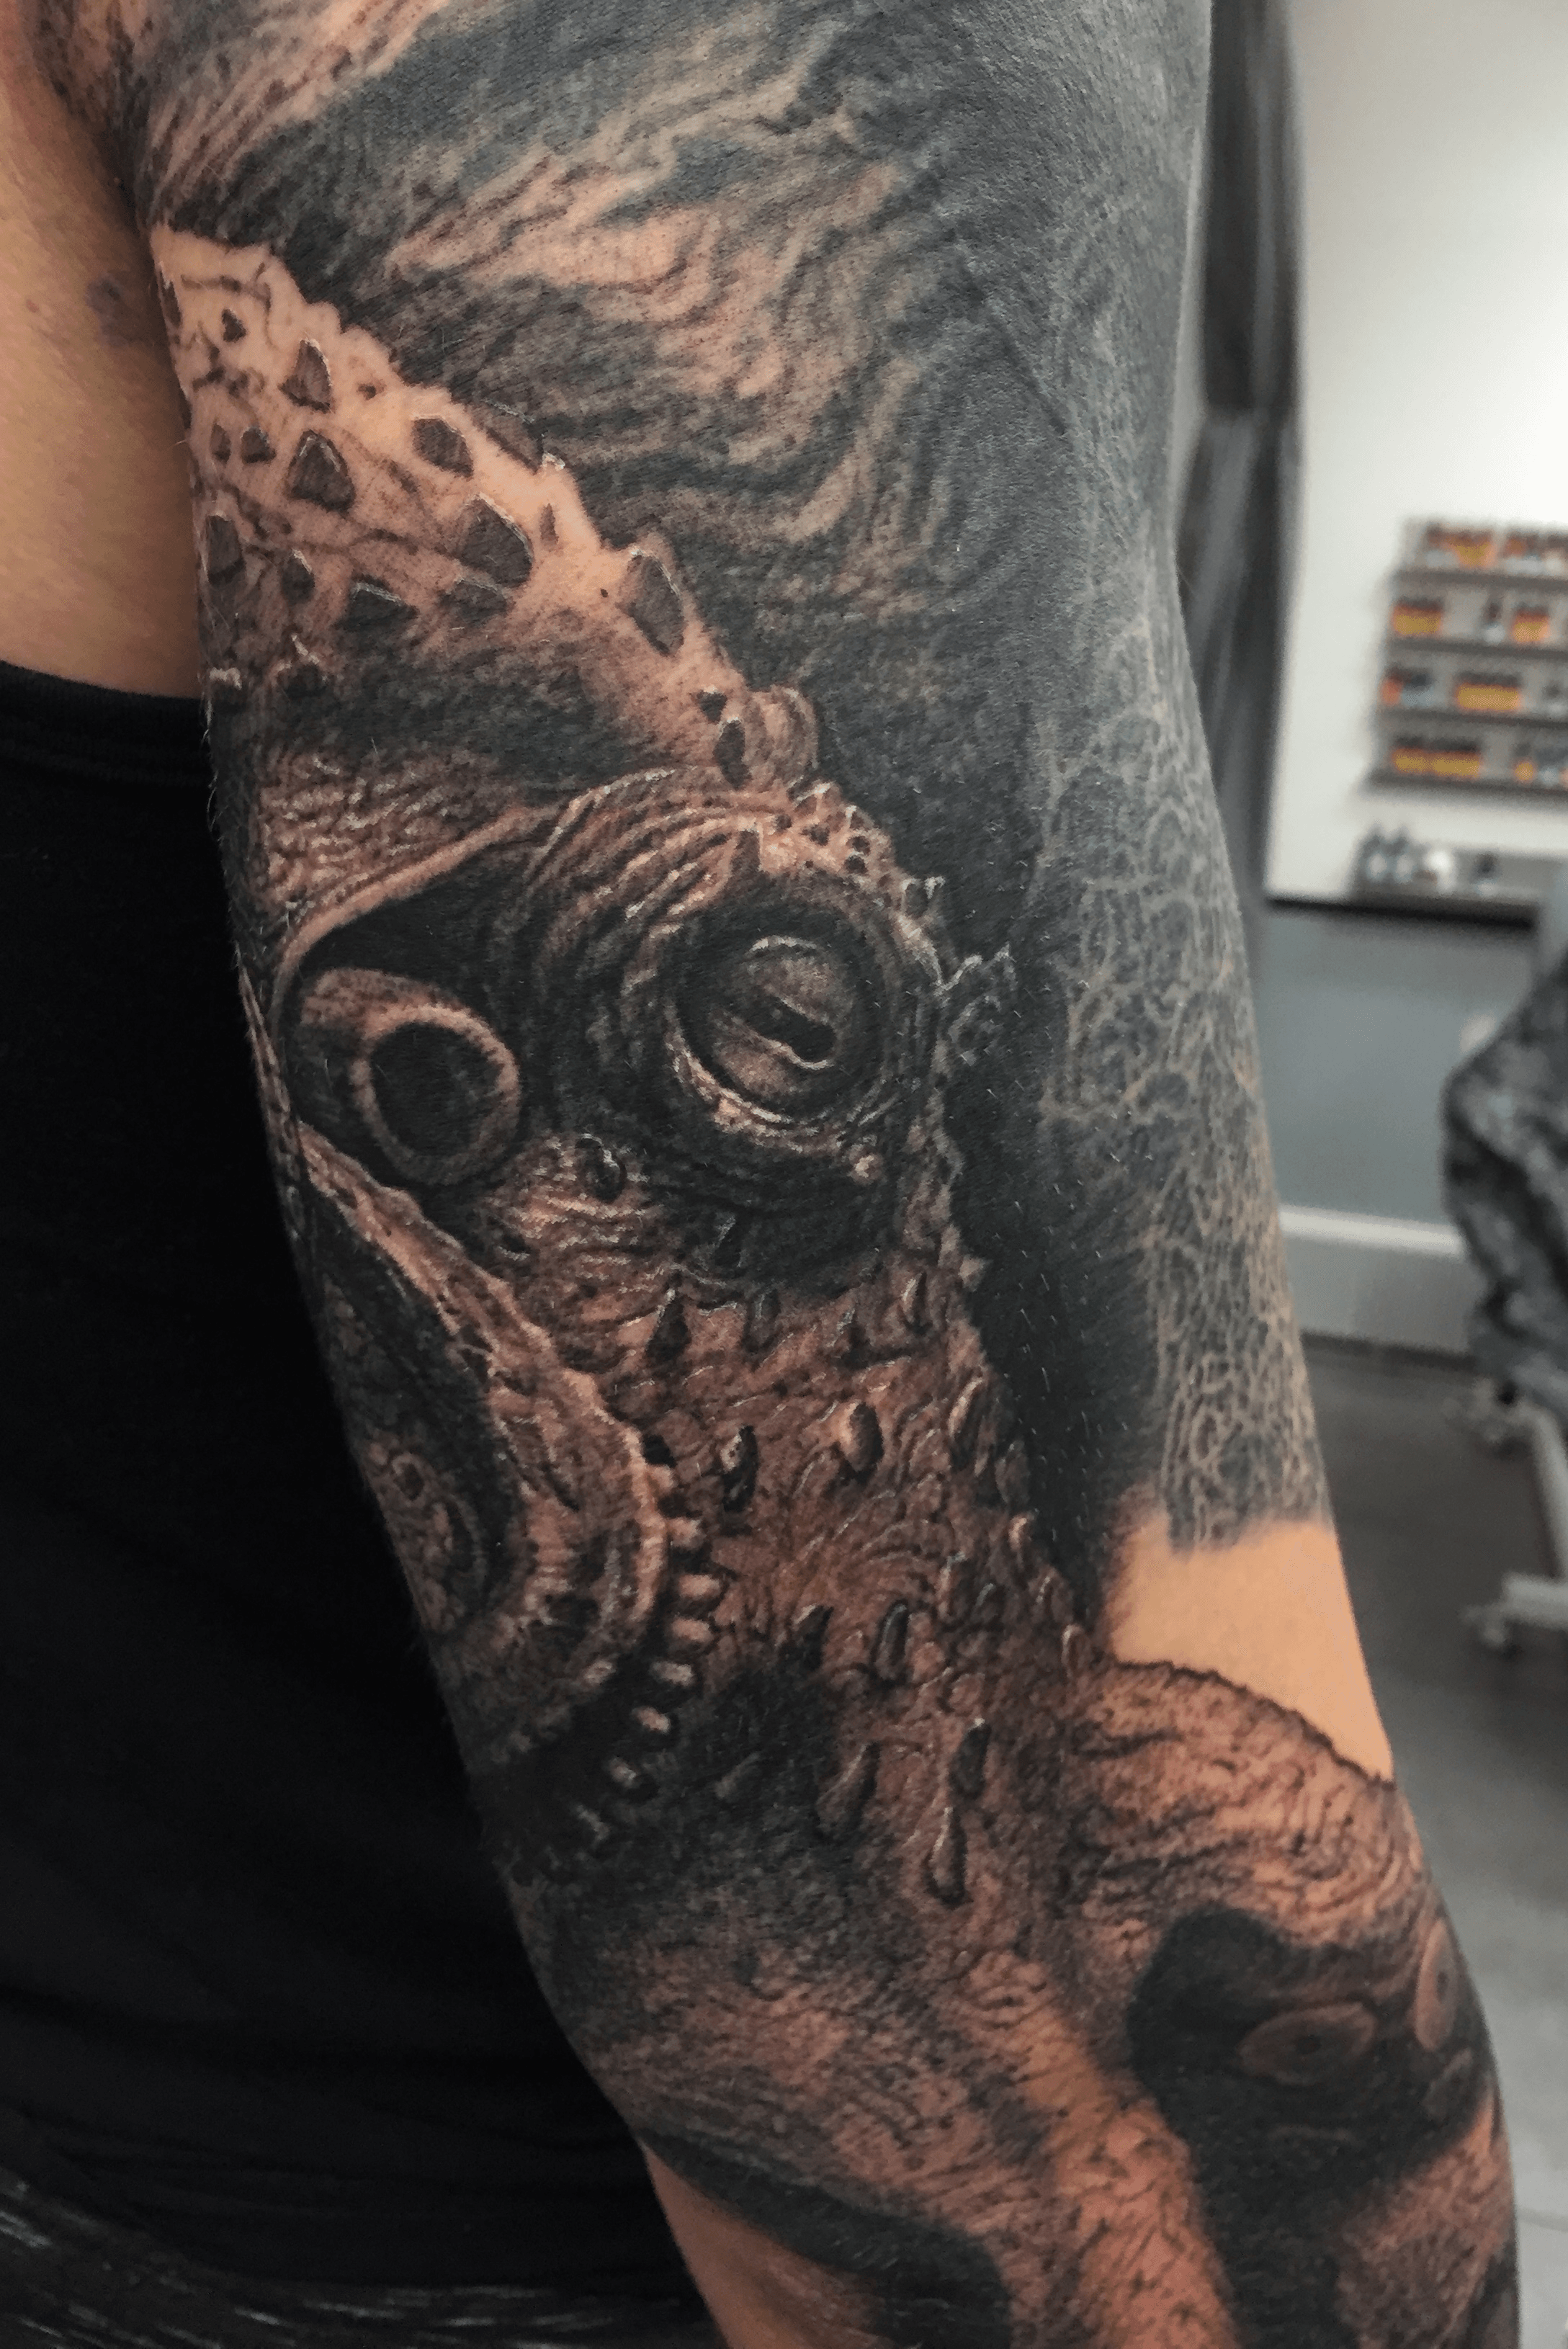 Octopus Tattoos for Men  Krake tattoo design Schulter tattoo Coole  tattoos